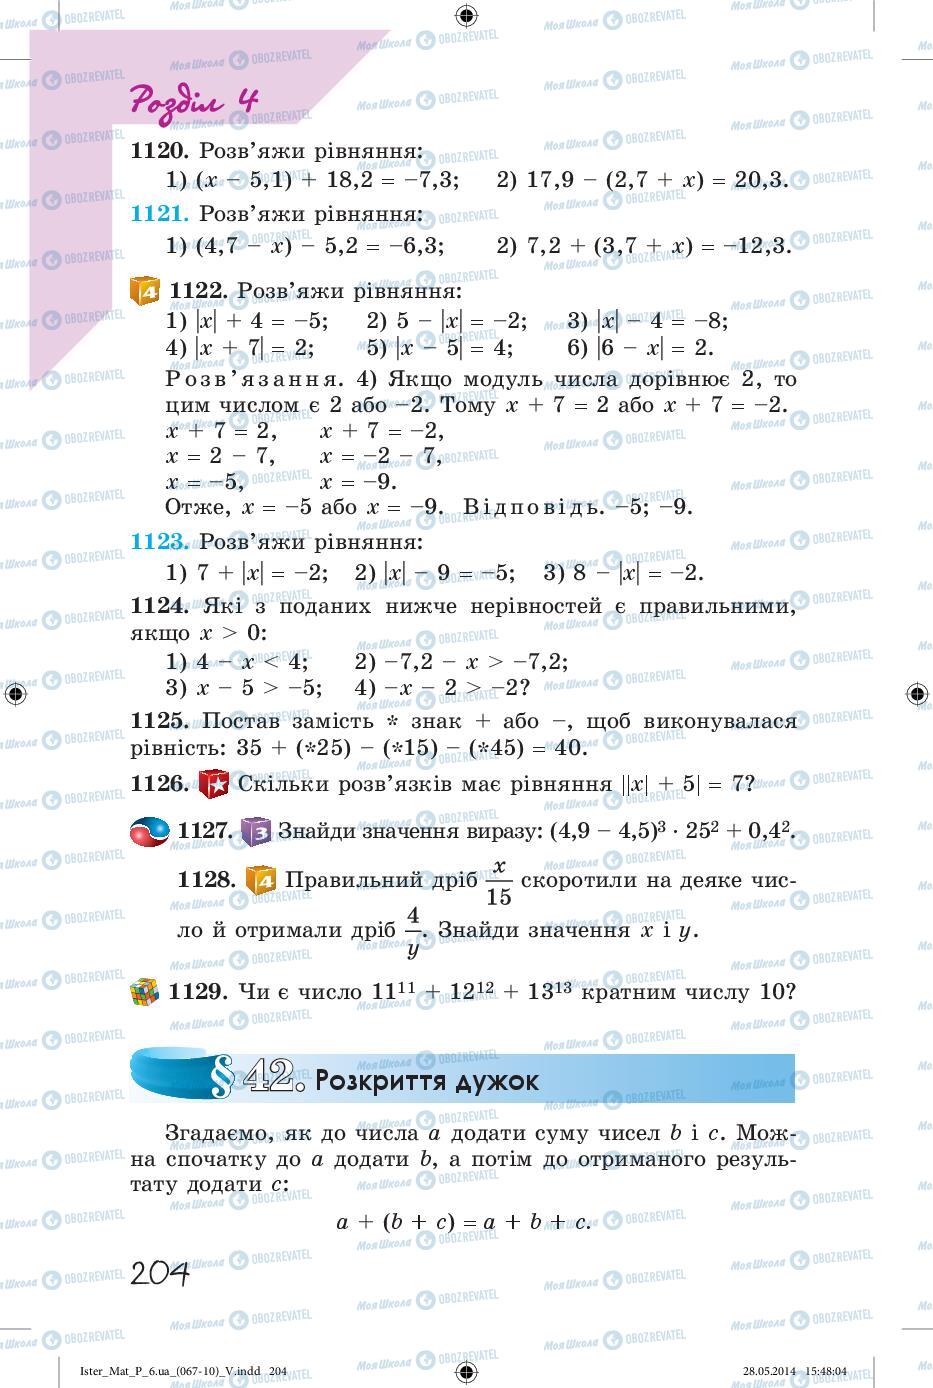 Учебники Математика 6 класс страница 204